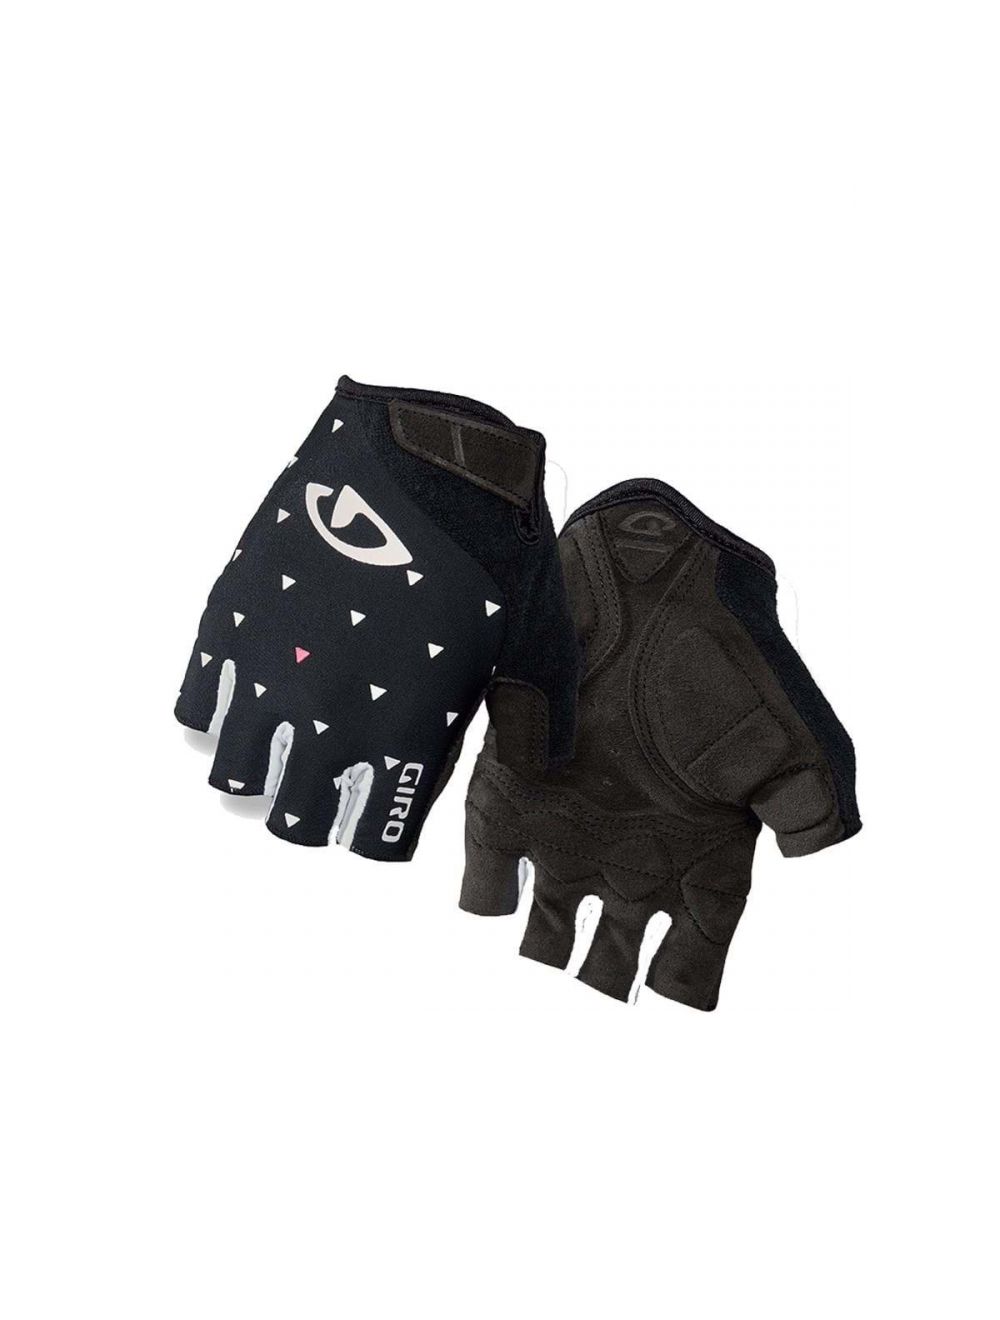 Giro Jagette Gloves Woman 2017